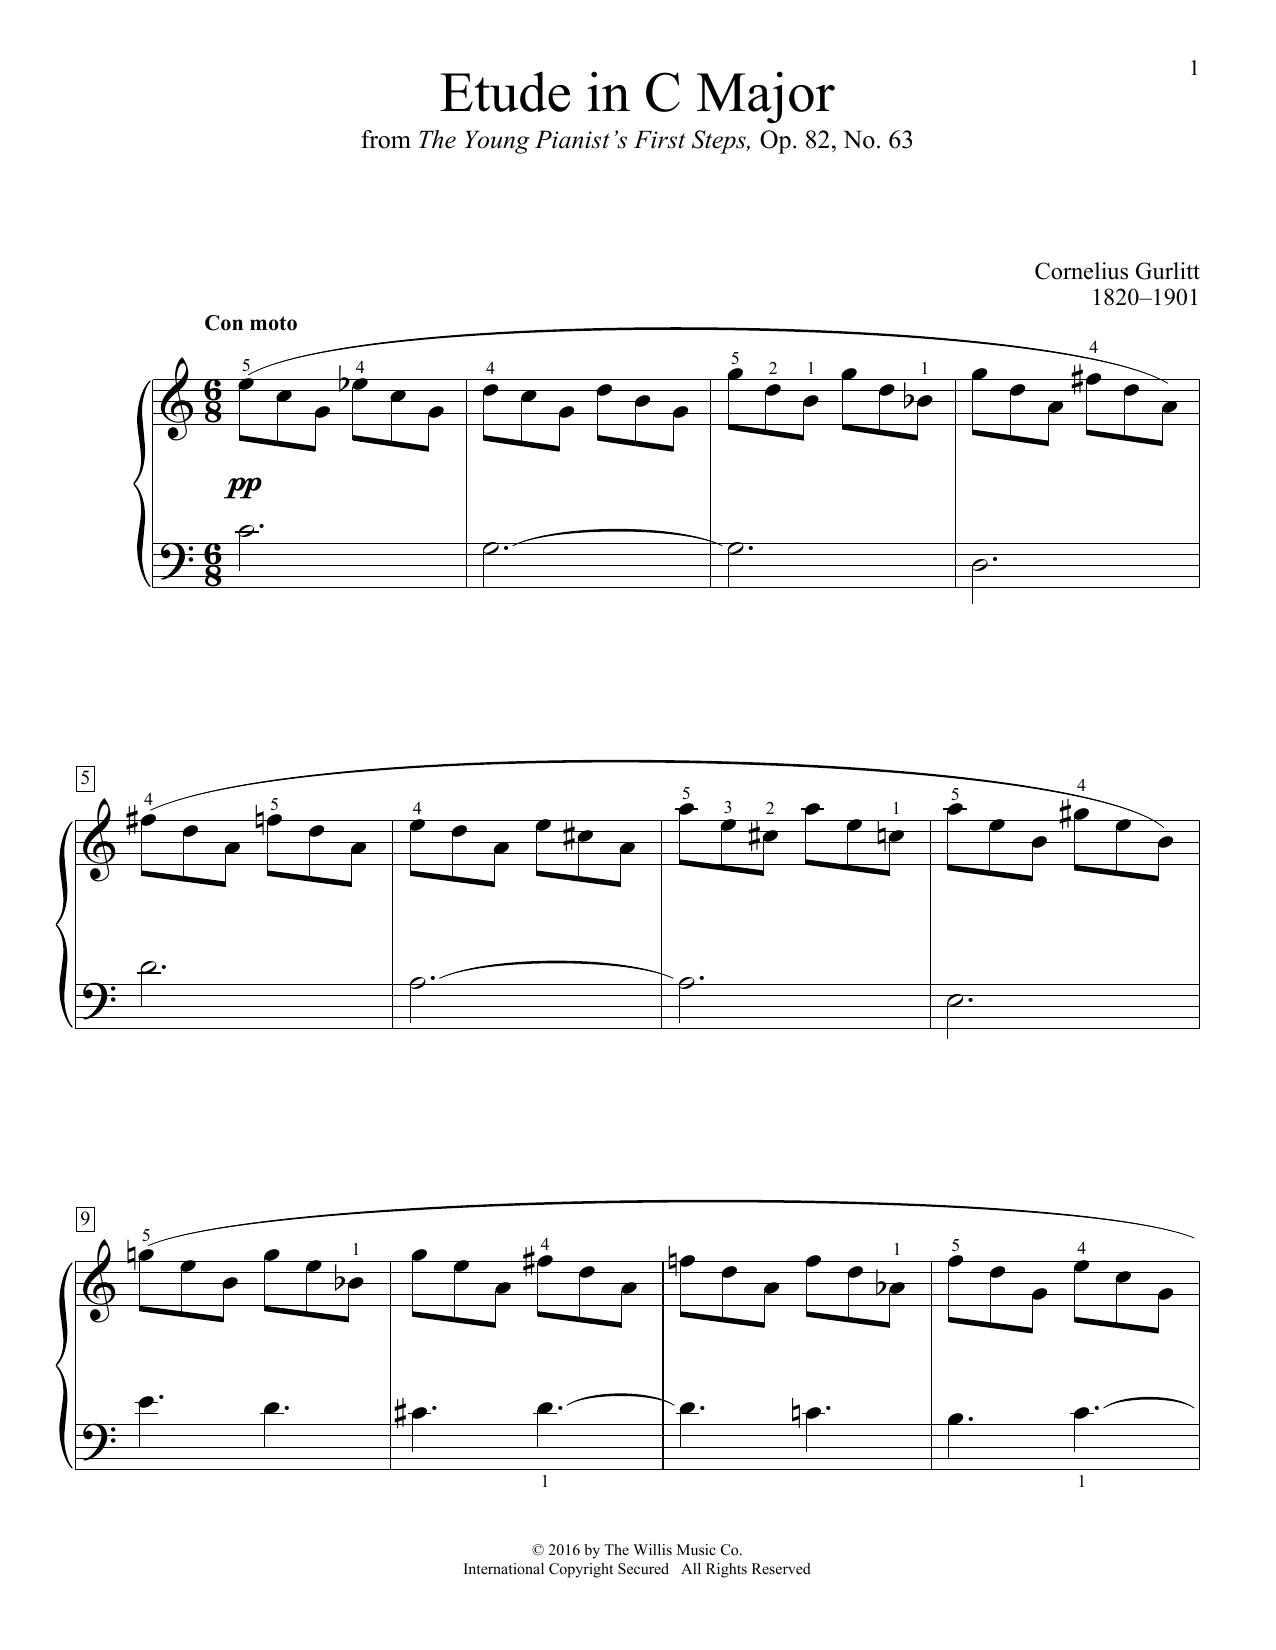 Cornelius Gurlitt Etude In C Major Sheet Music Notes & Chords for Educational Piano - Download or Print PDF